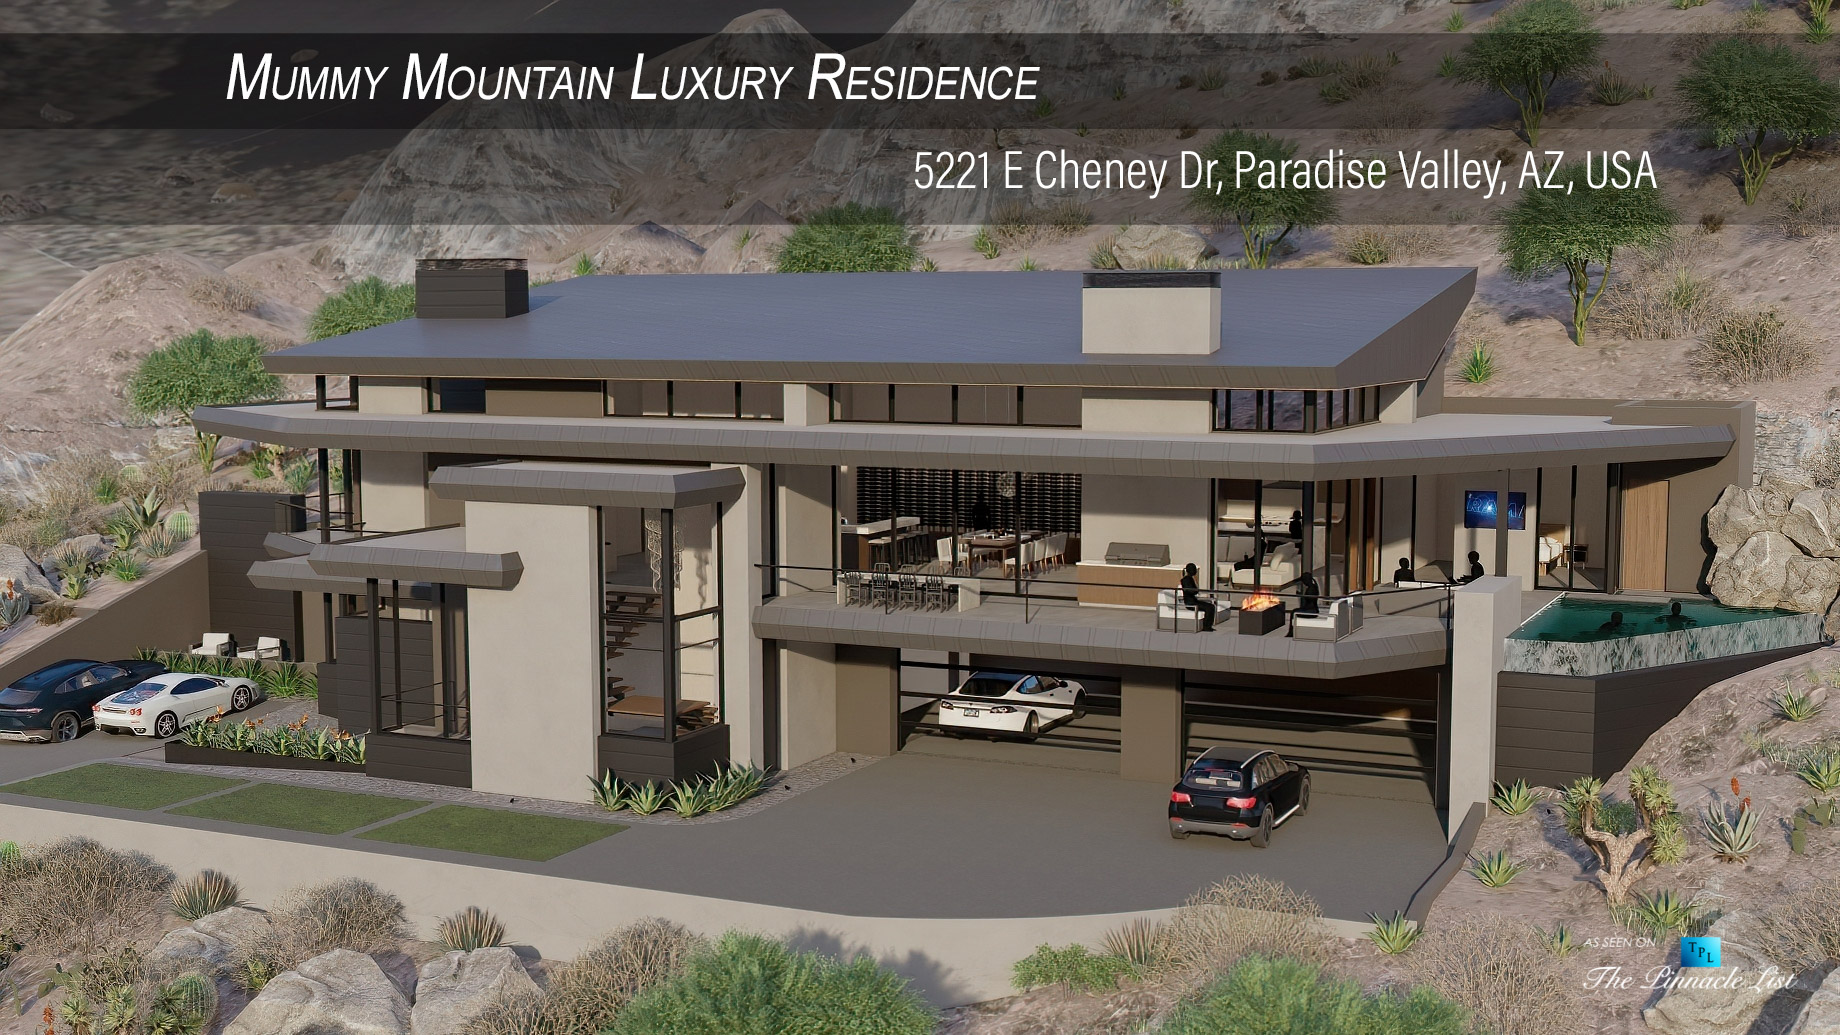 Mummy Mountain Luxury Residence - 5221 E Cheney Dr, Paradise Valley, AZ, USA